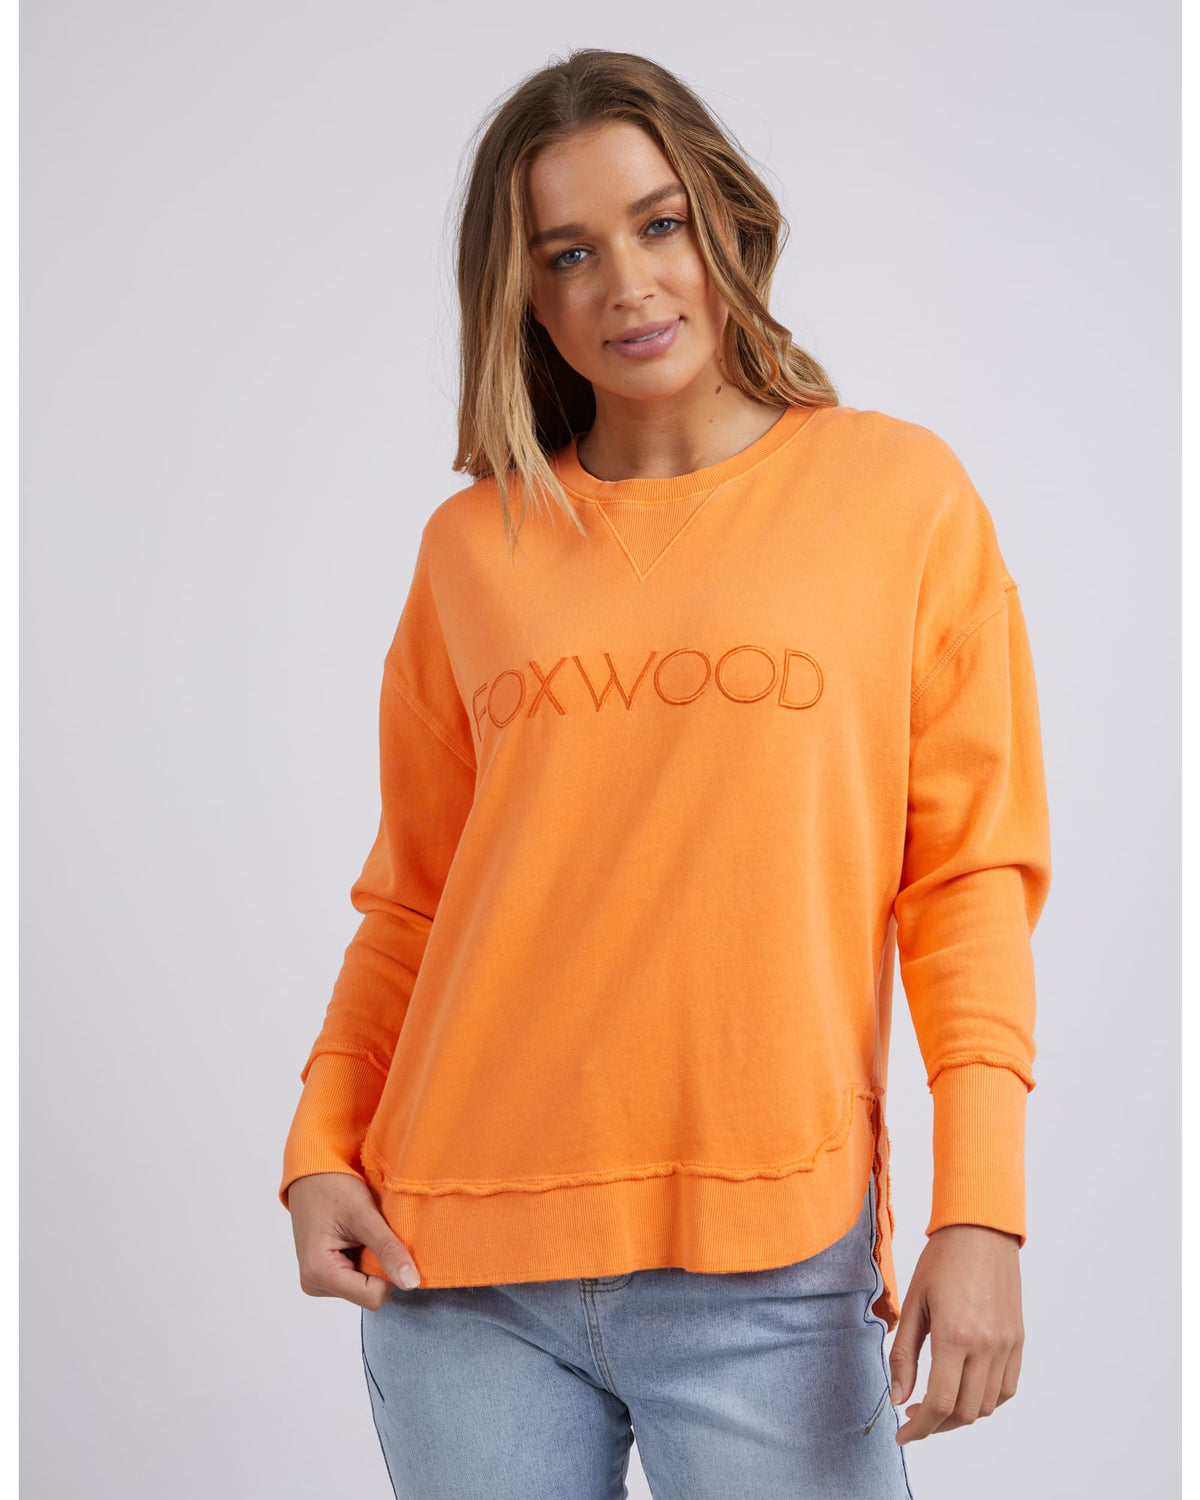 Foxwood - Simplified Crew - Orange